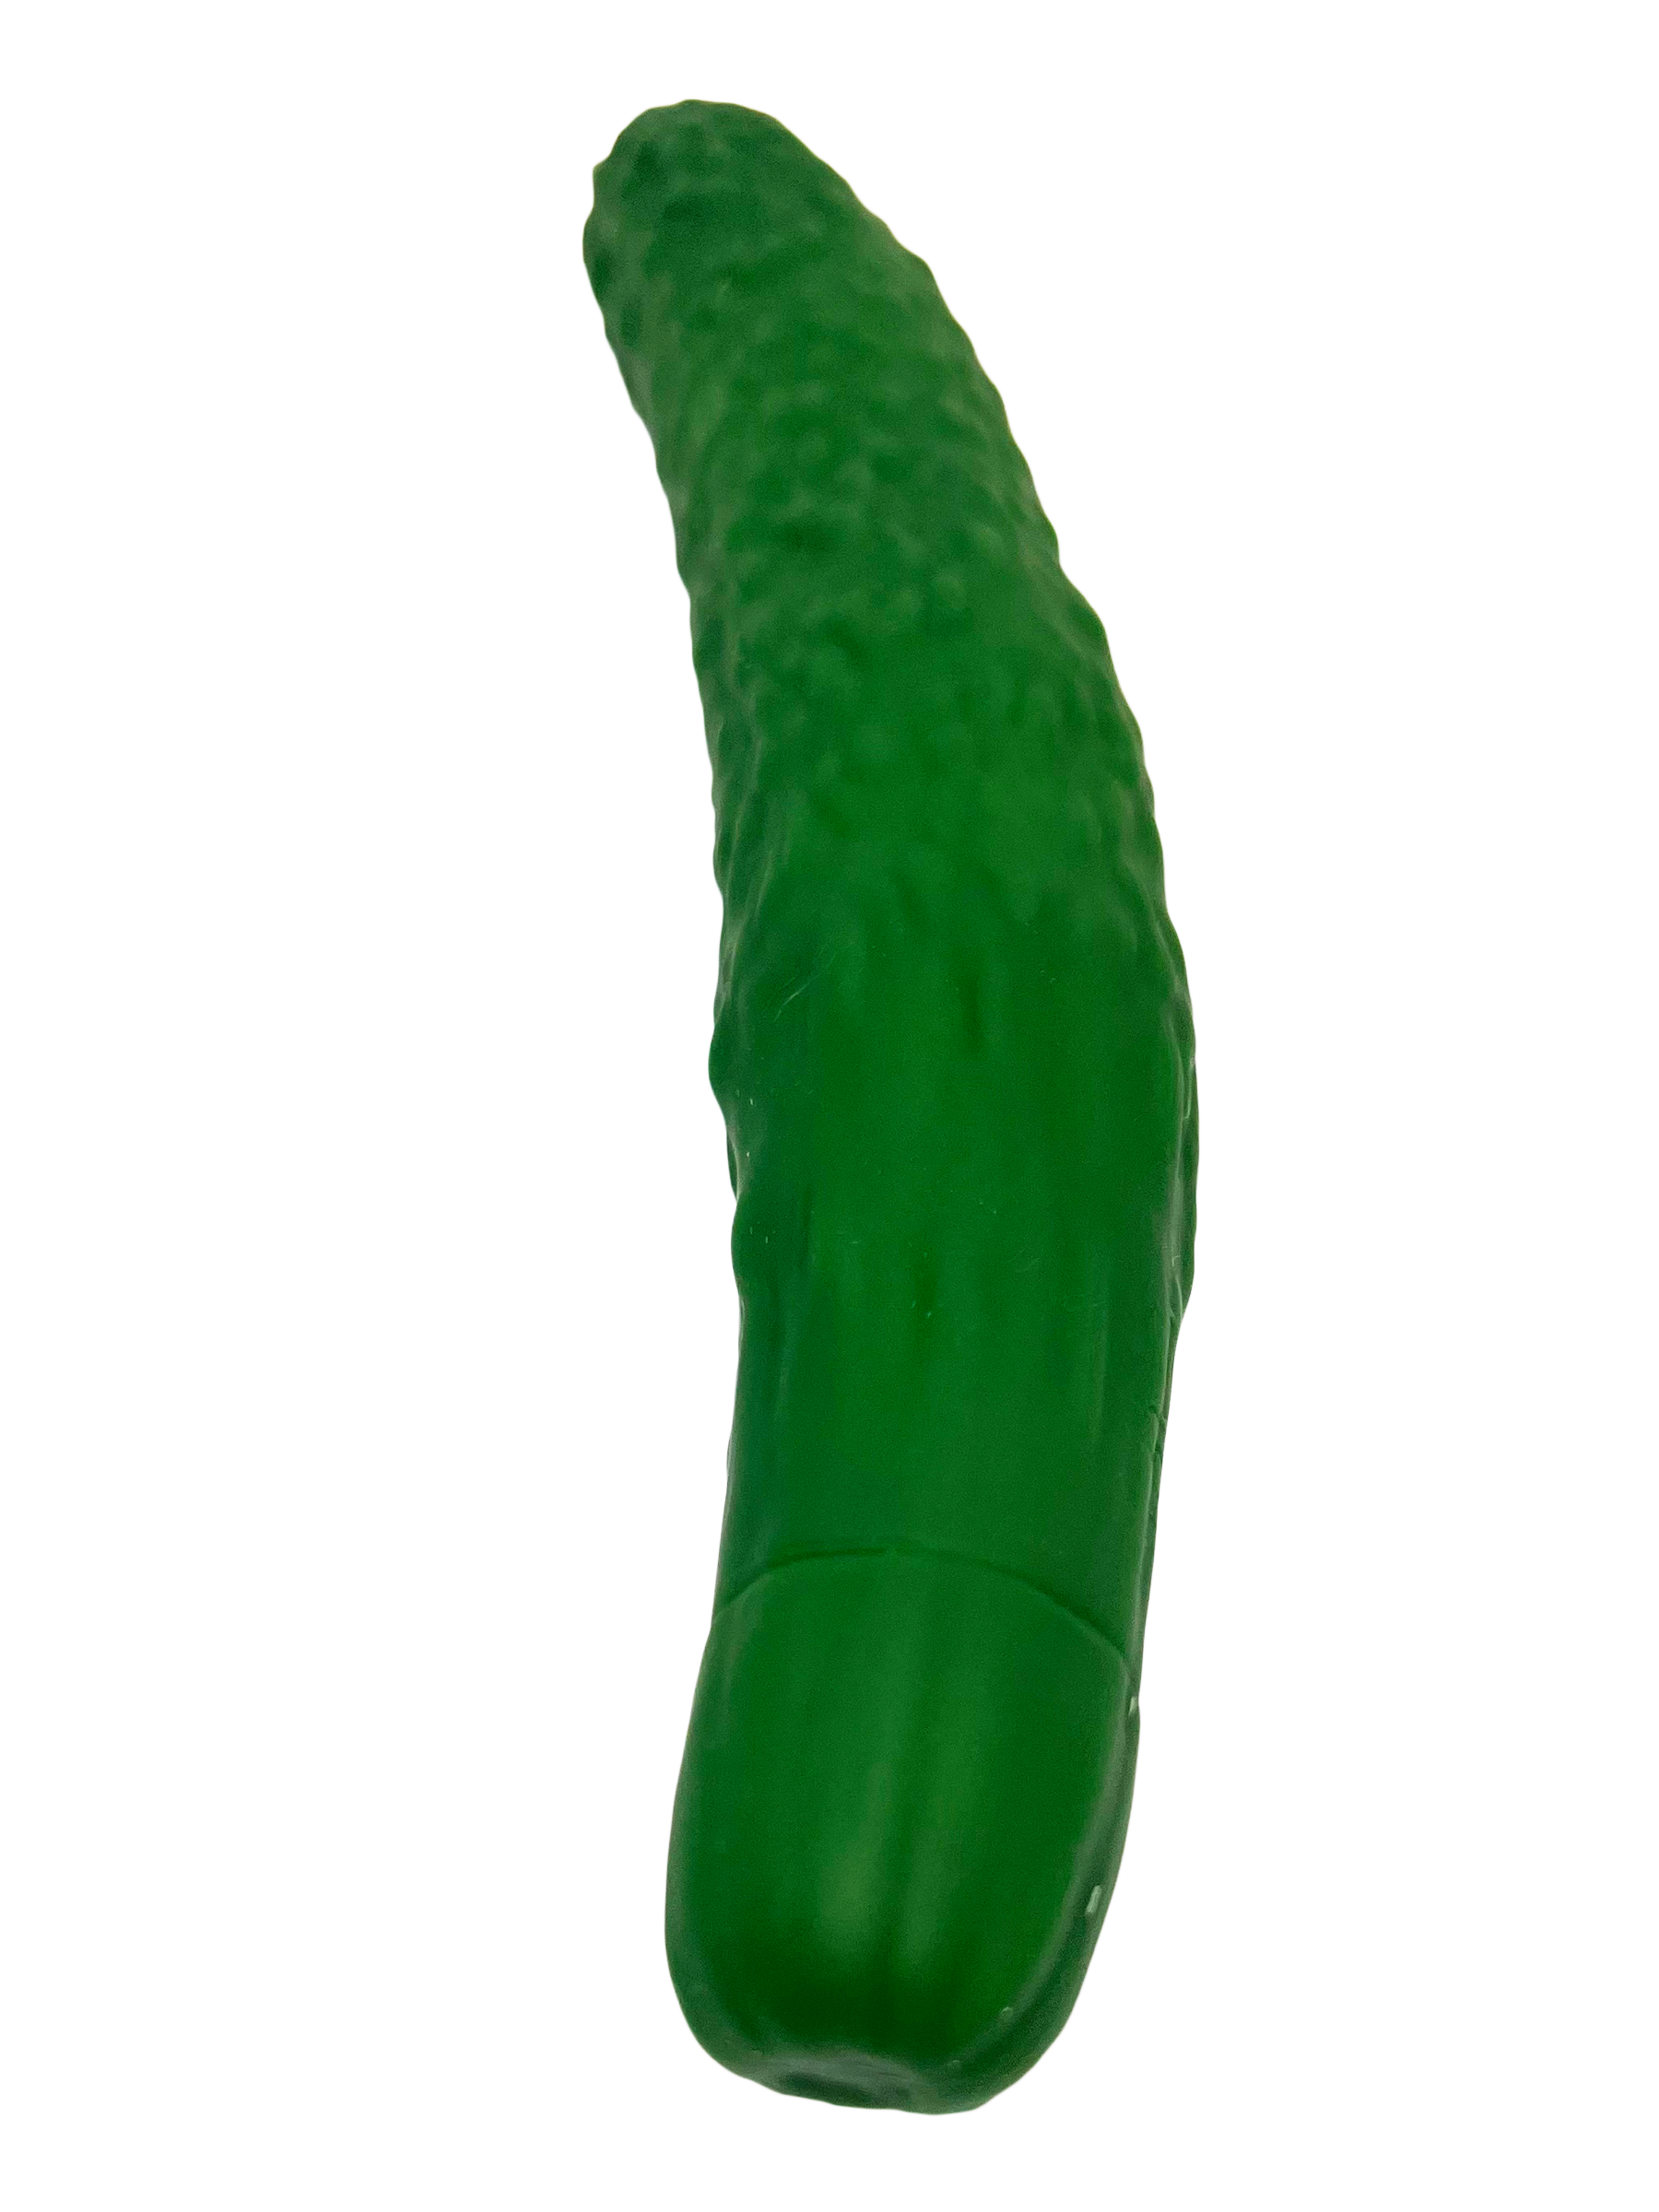 Vegetable Vibes Cucumber Vibrator Base